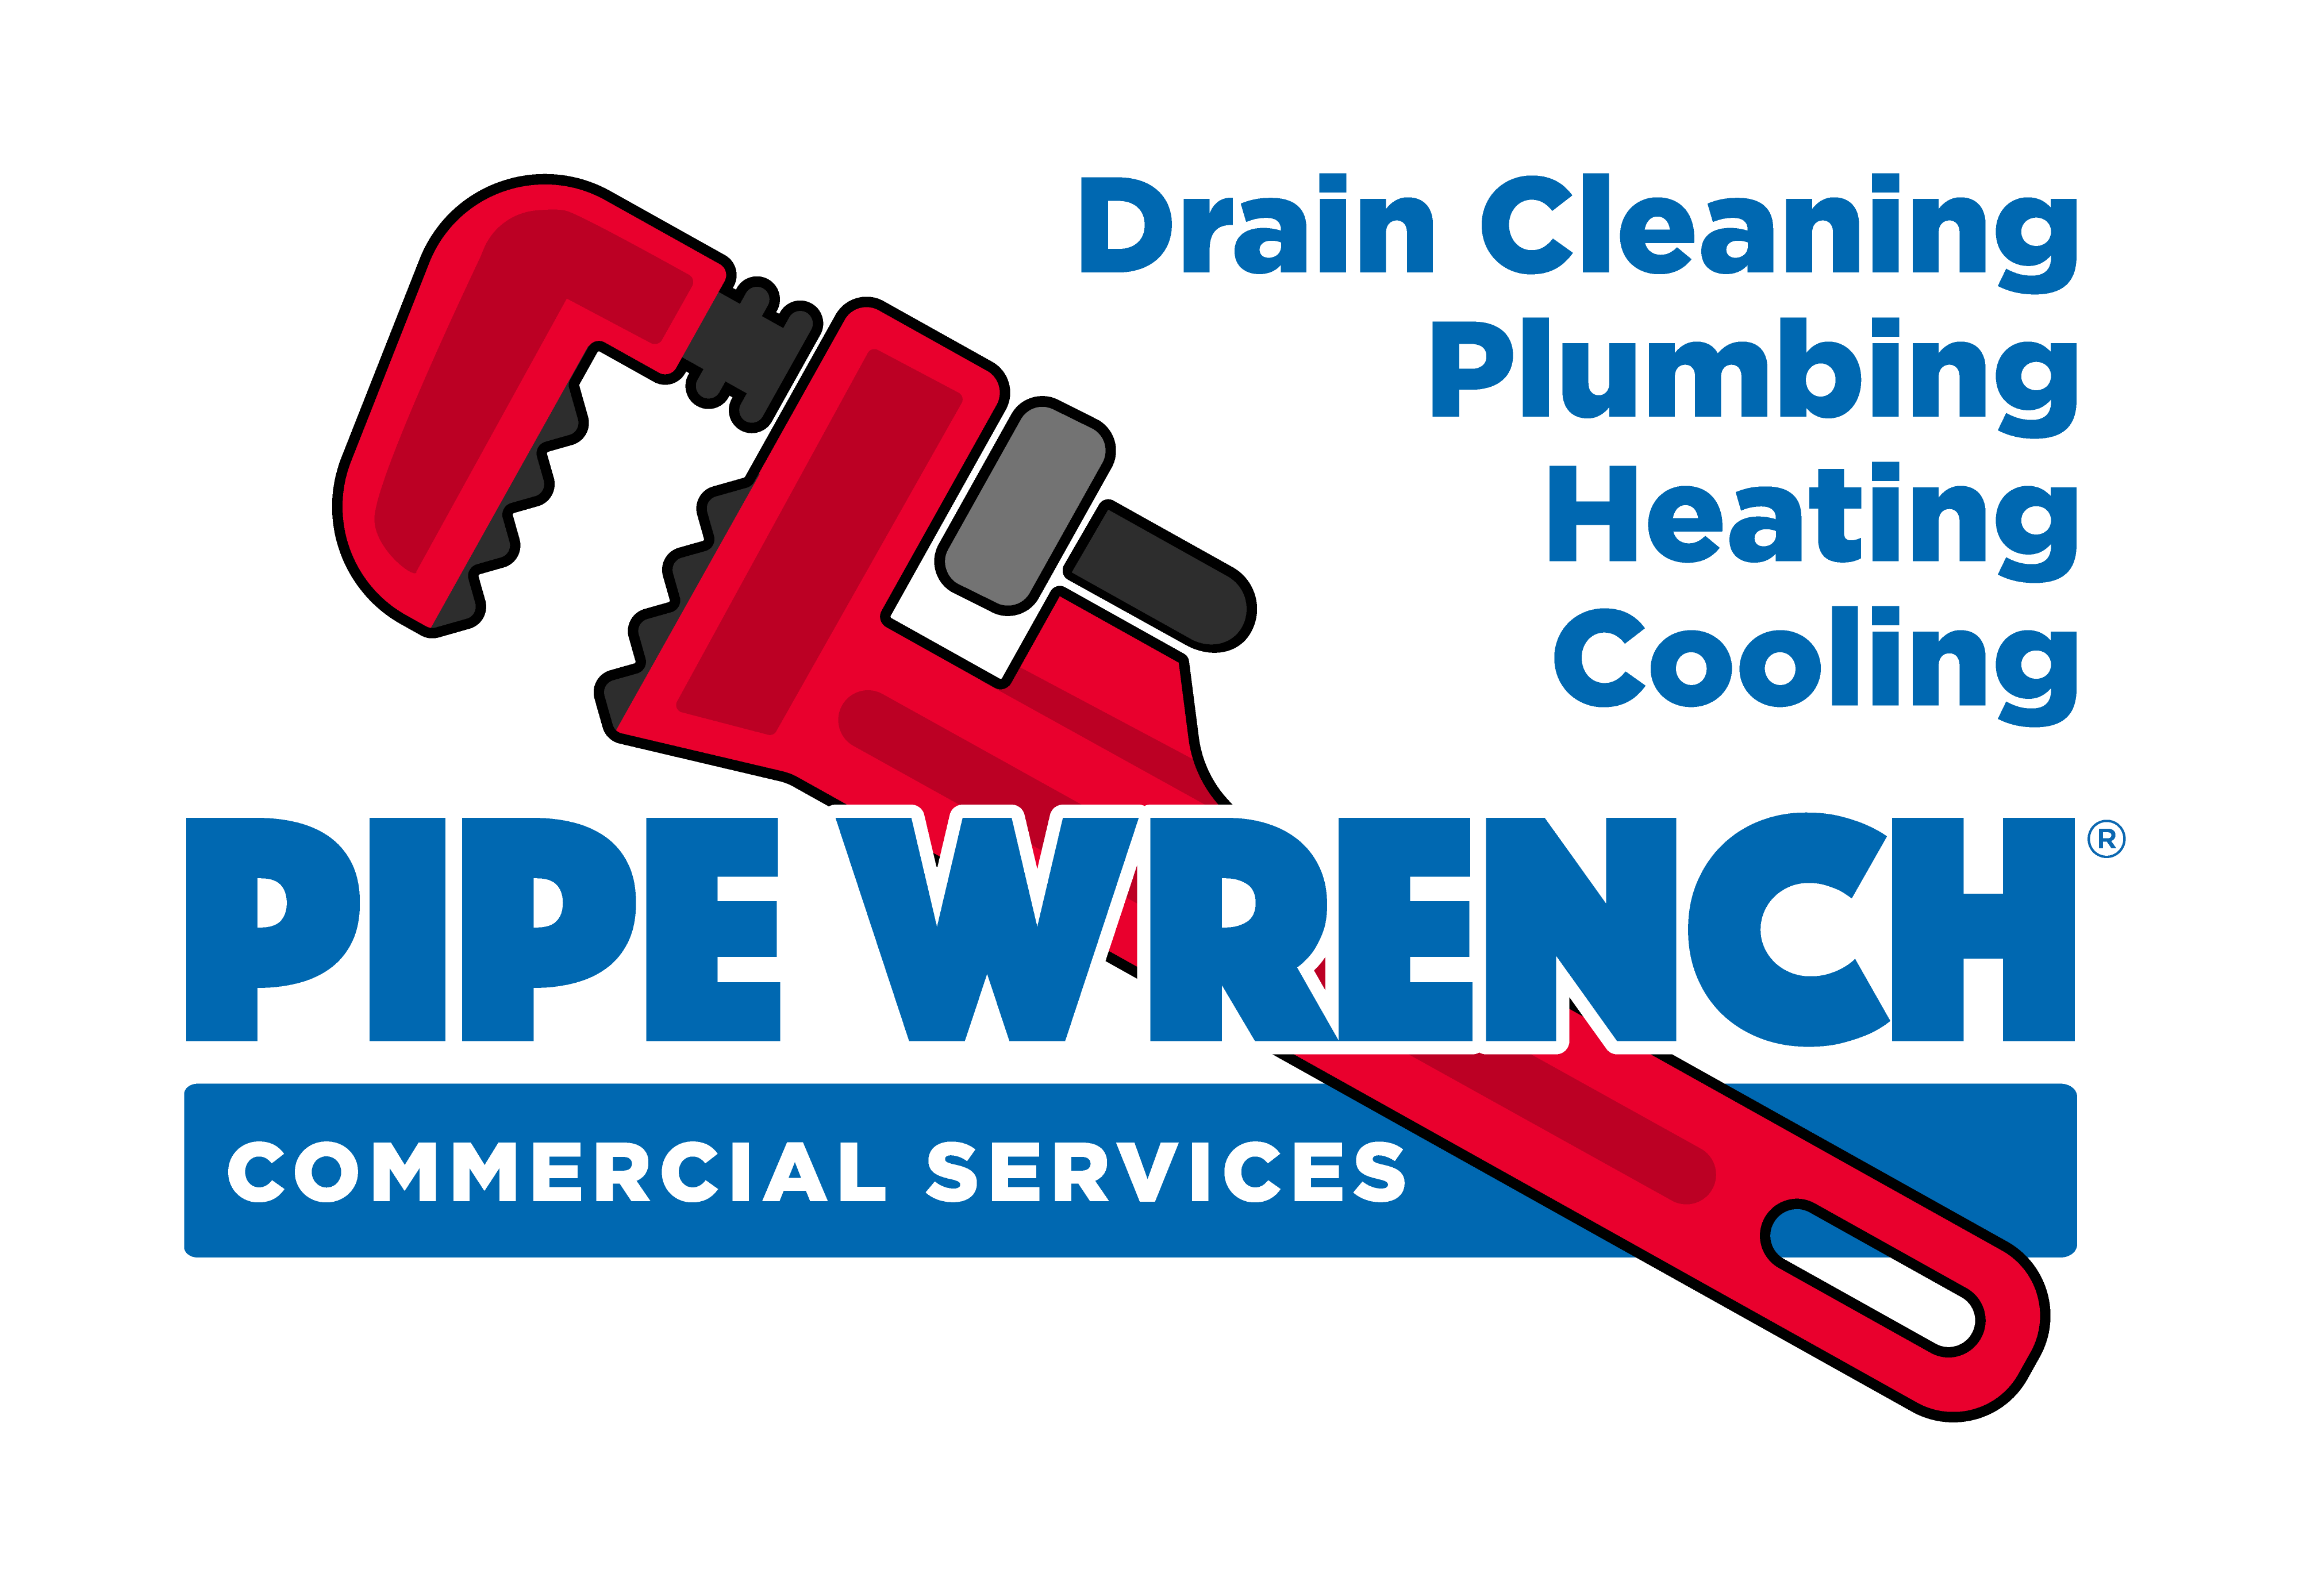 Pipe Wrench Plumbing, Heating & Cooling, Inc. logo